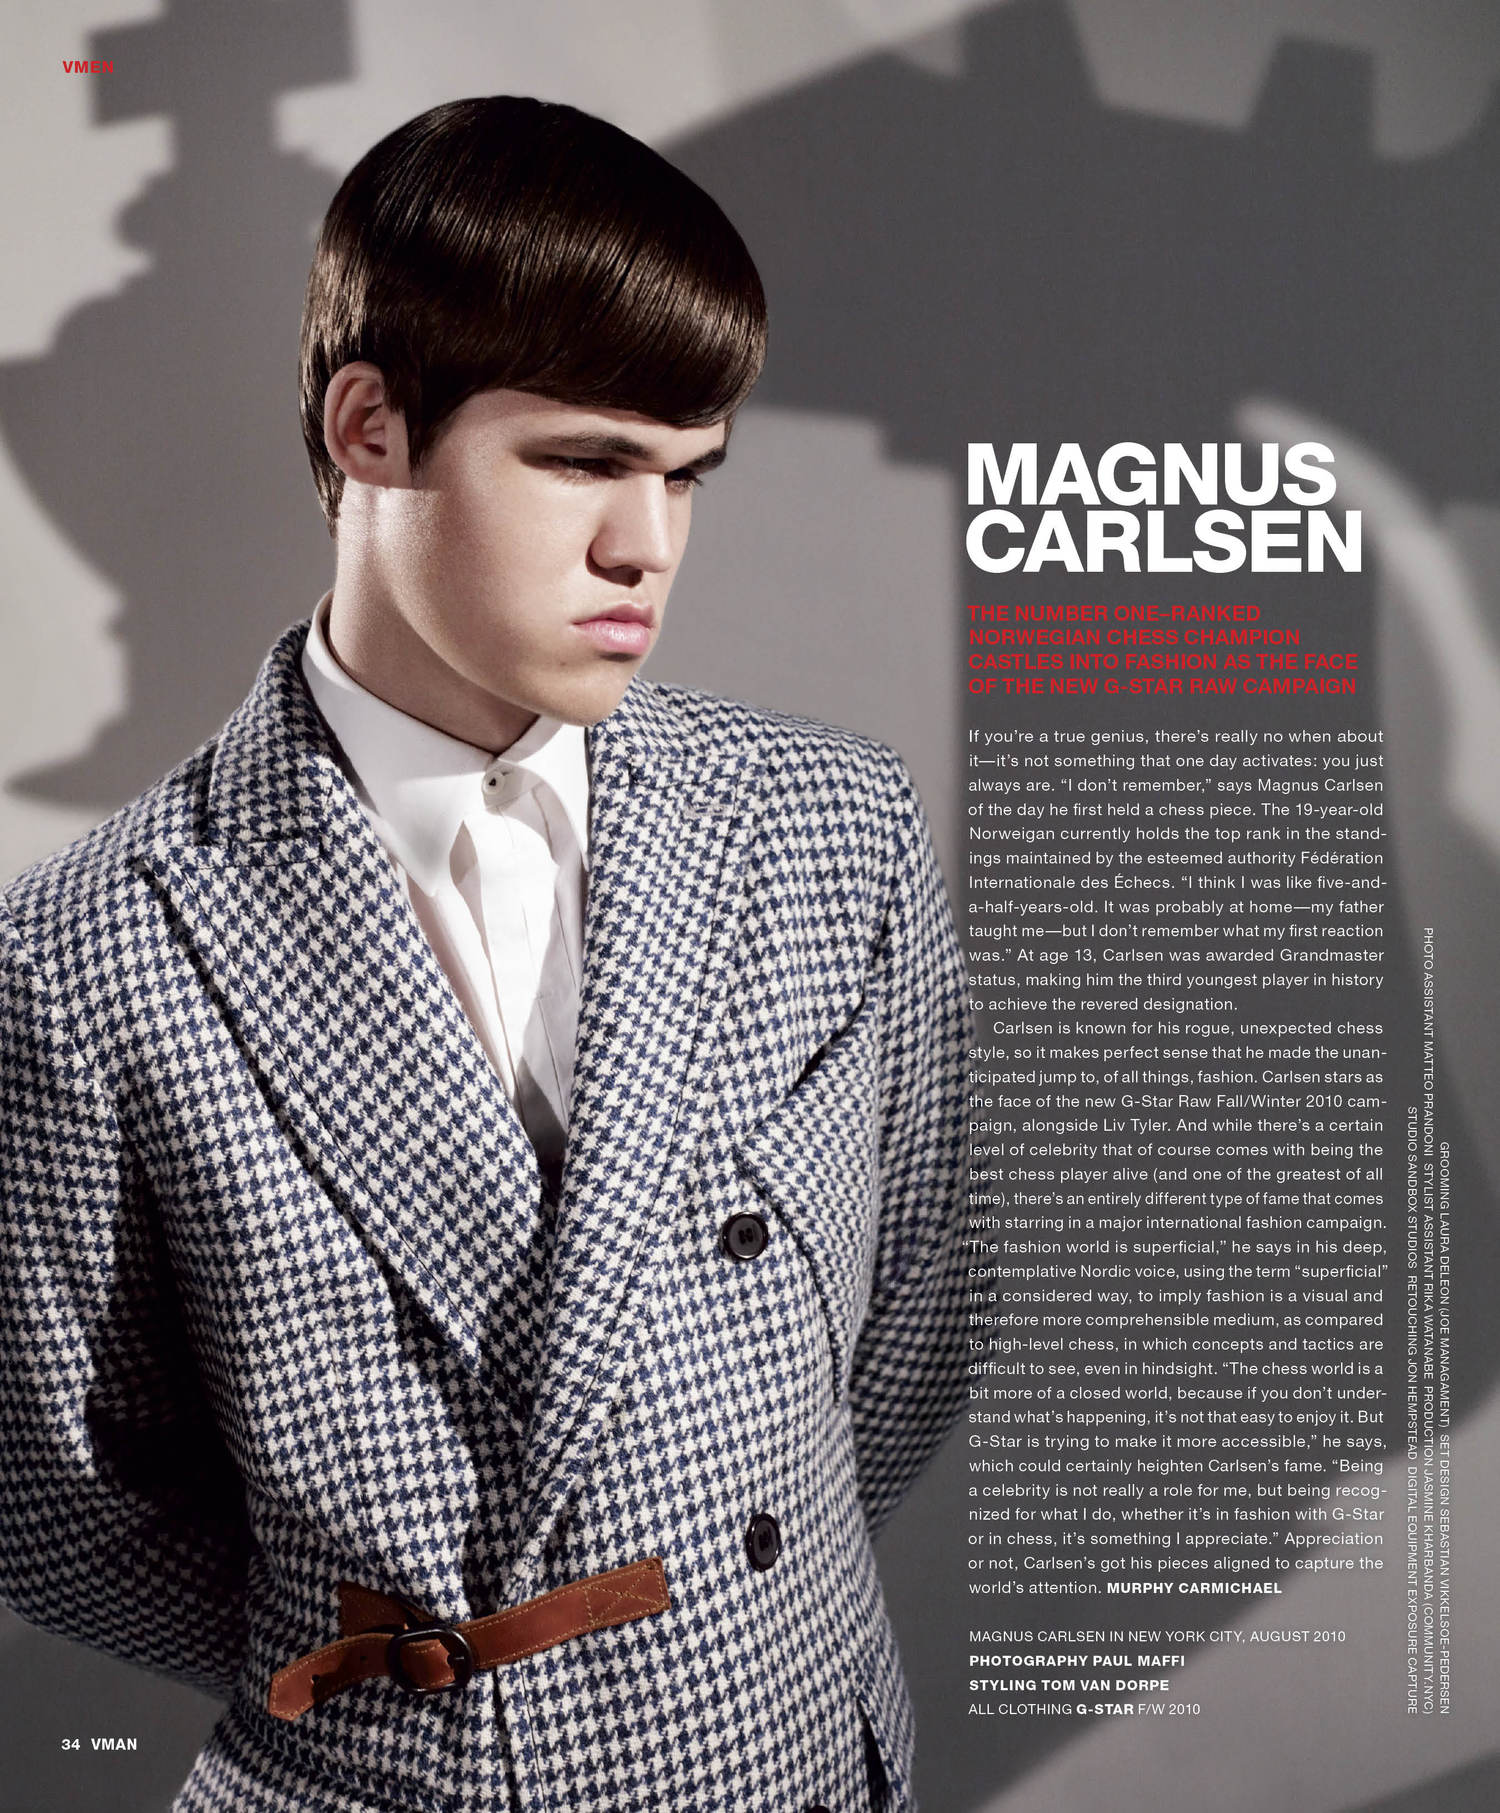 Magnus Carlsen with Liv Tyler : r/chess